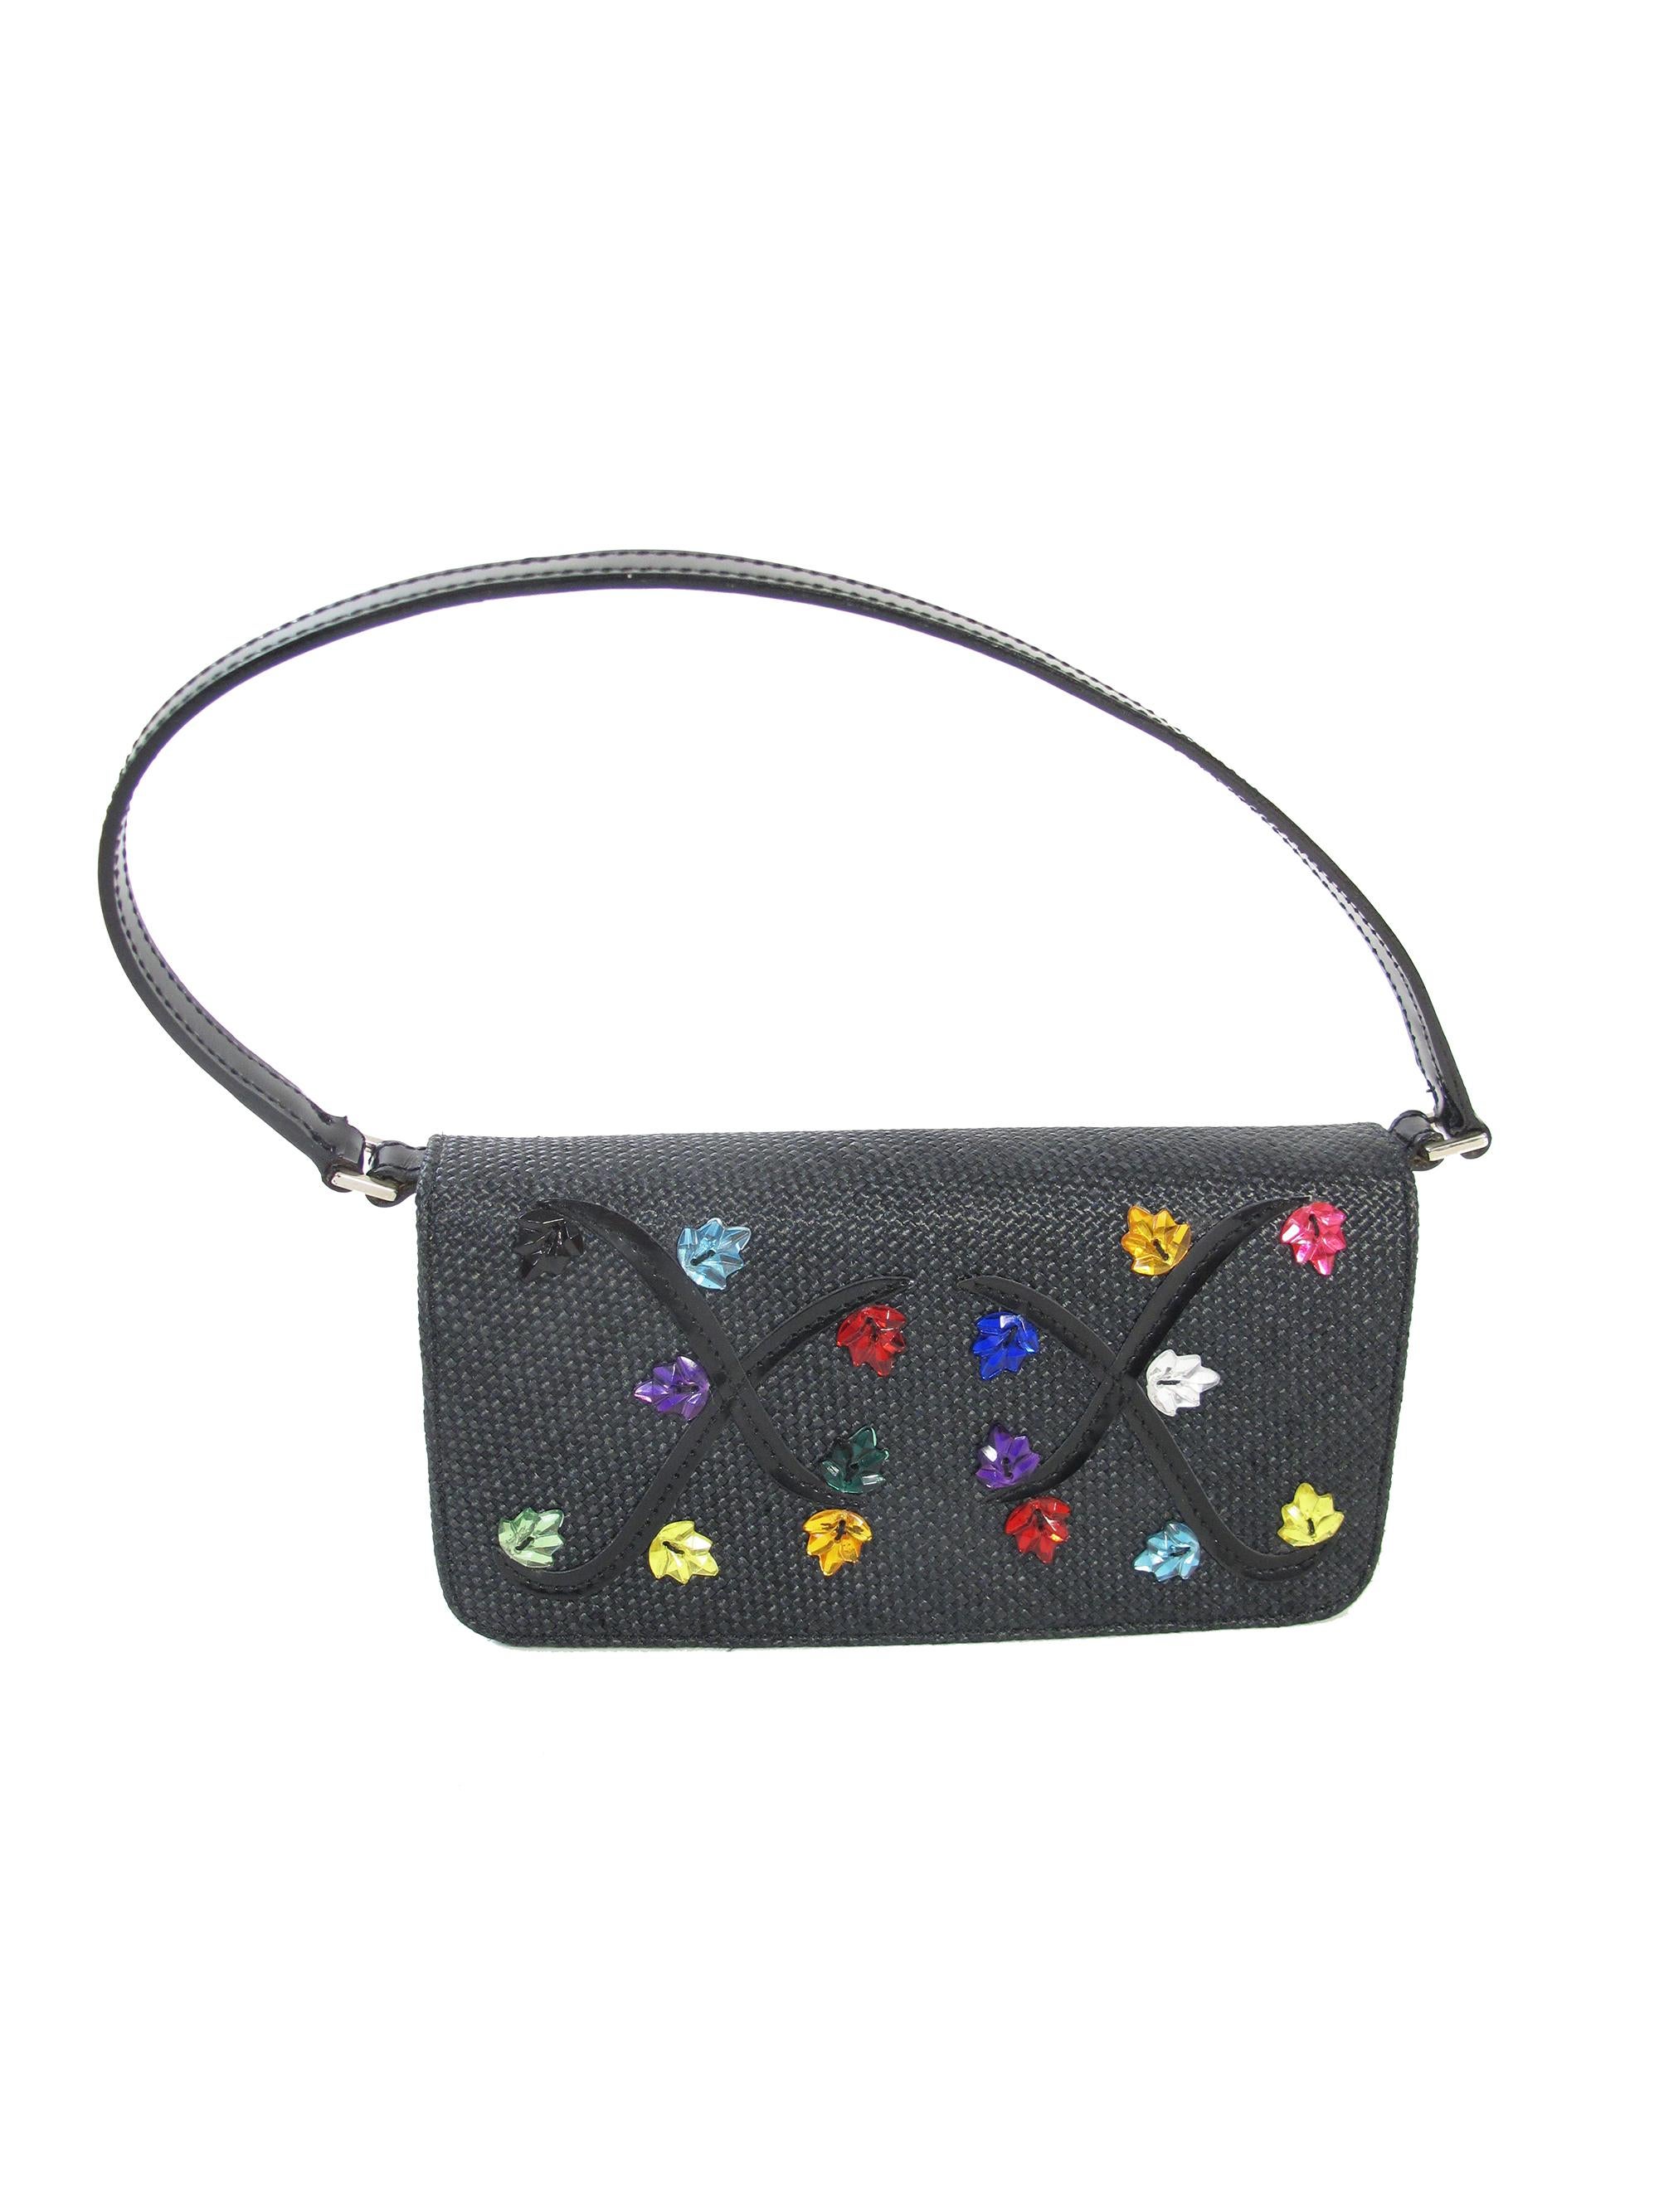 Renaud Pellegrino black raffia mini bag with jewel embellishments In Excellent Condition In Austin, TX